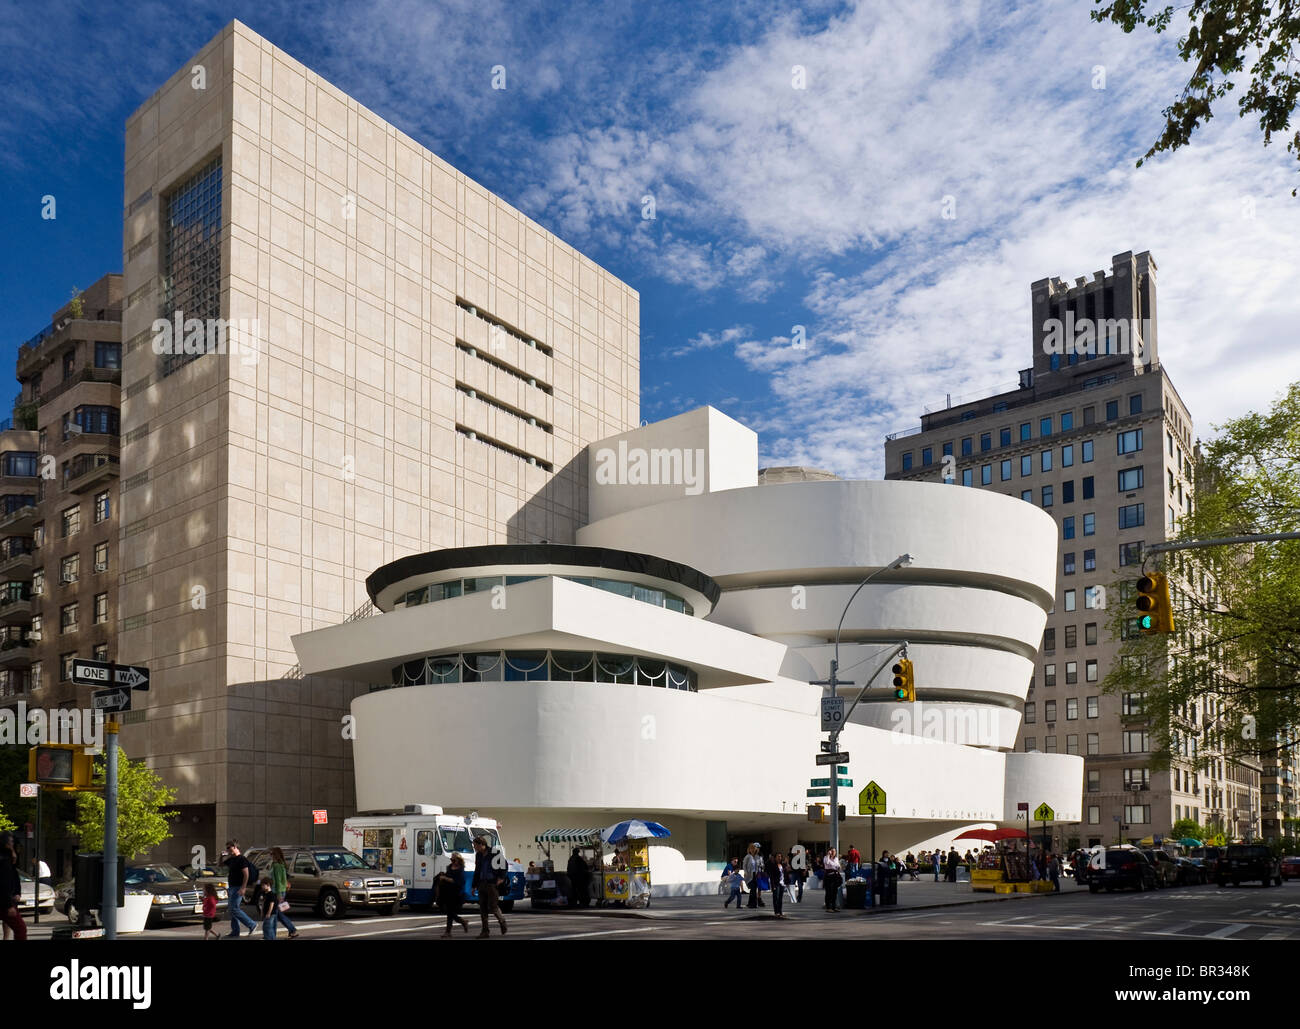 Il Guggenheim Museum di New York City. Frank Lloyd Wright, architetto. Foto Stock